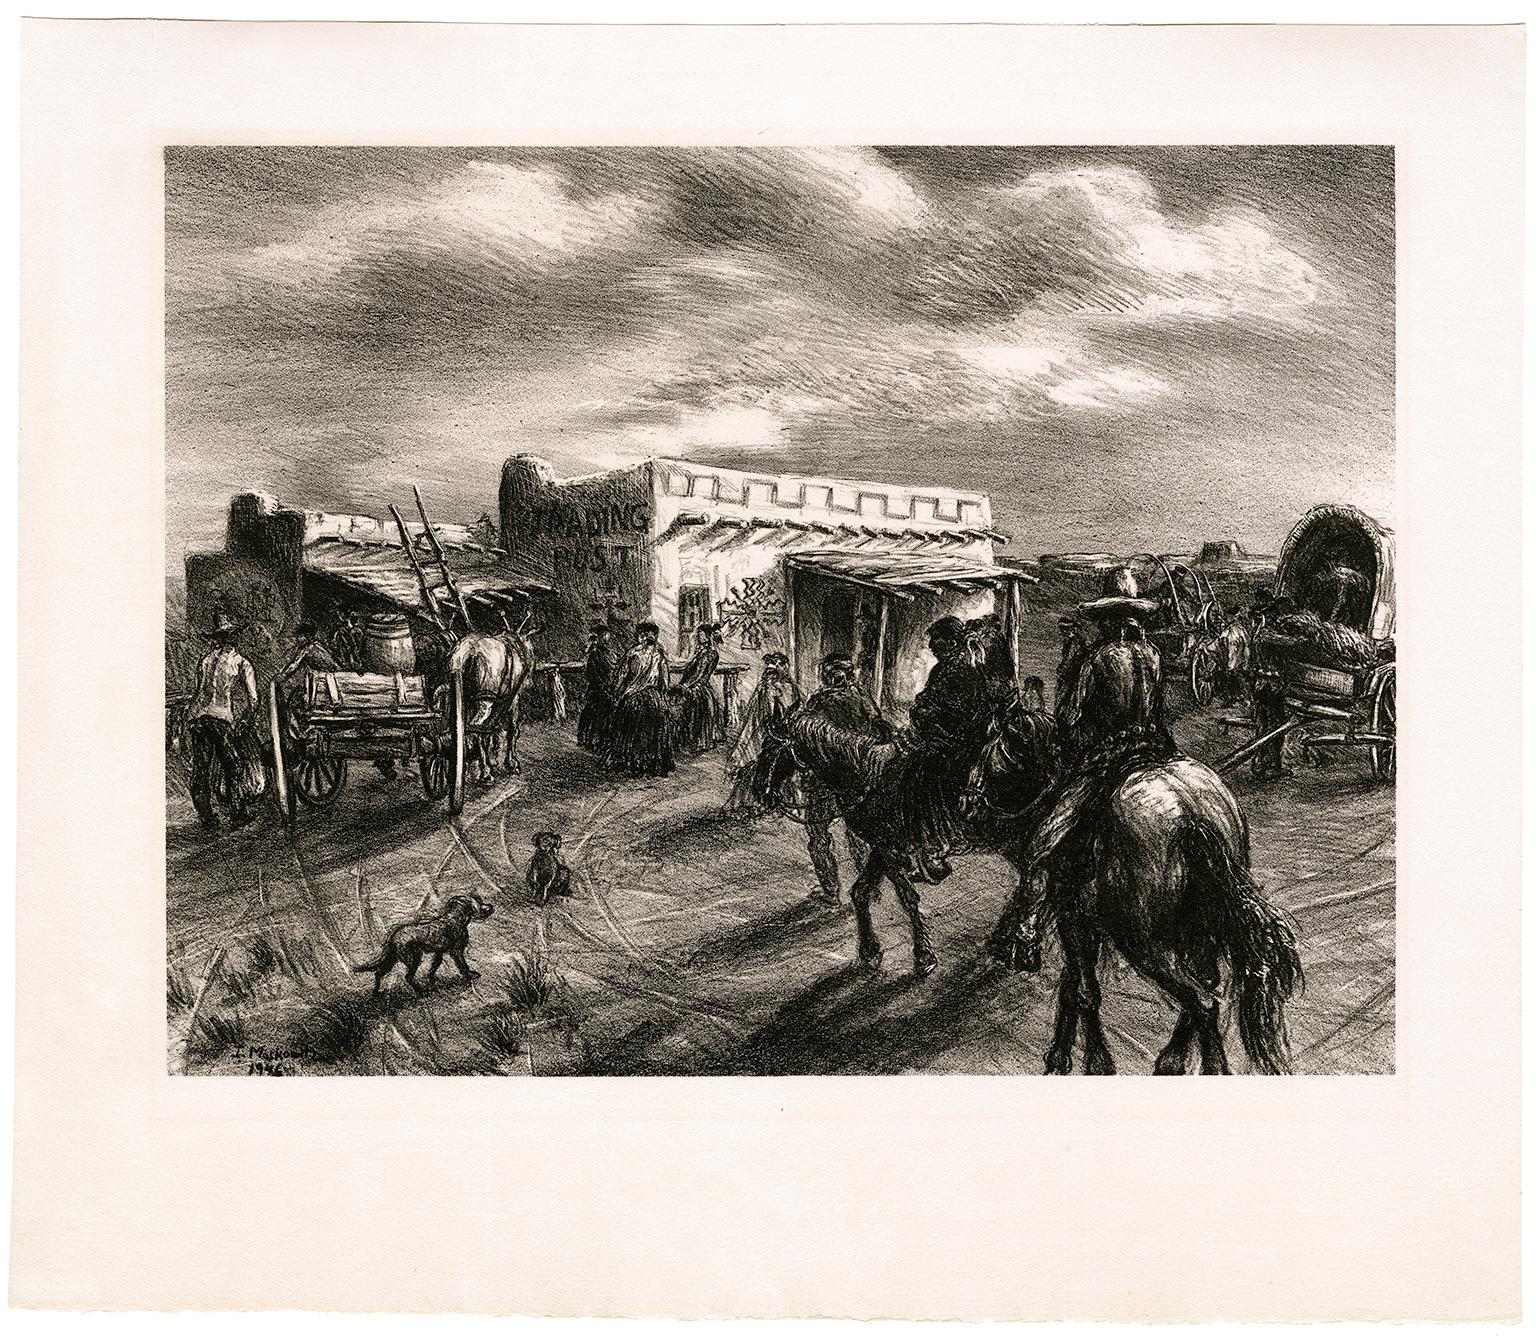 'Navajo Trading Post' — 1940s Southwest Regionalism - Print by Ira Moskowitz